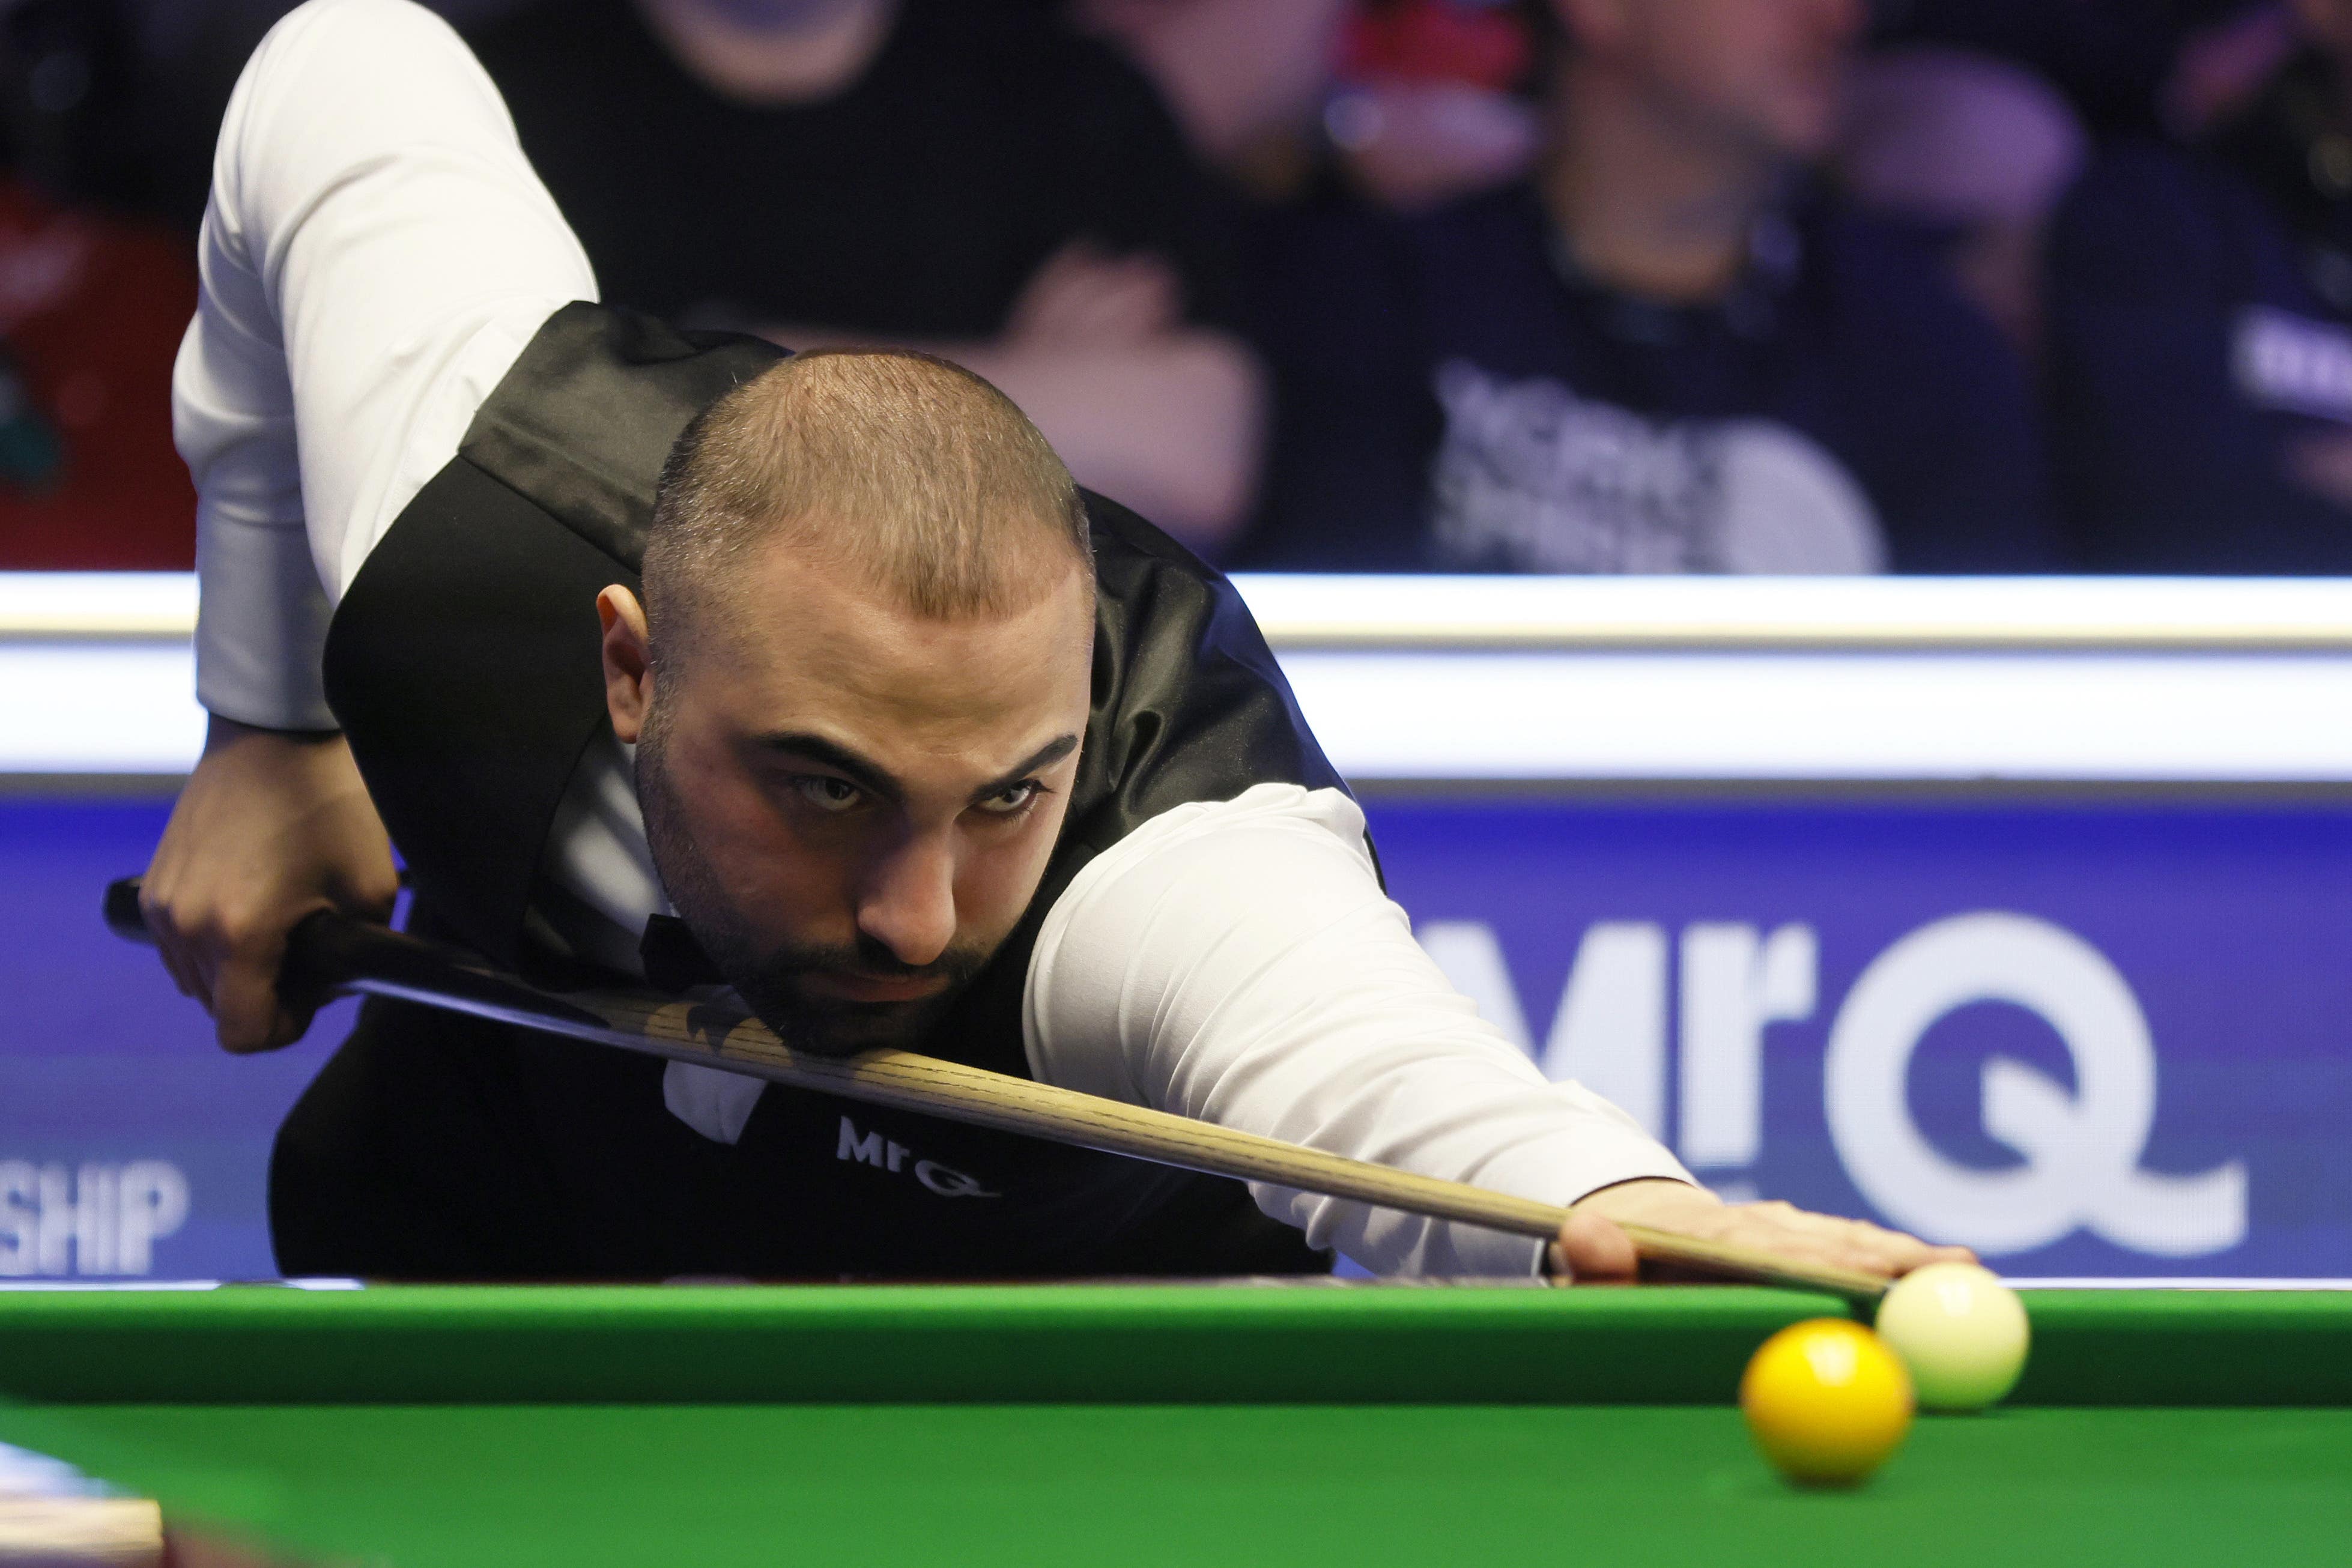 Hossein Vafaei will play Ronnie O’Sullivan in the semi-finals of the UK Snooker Championship